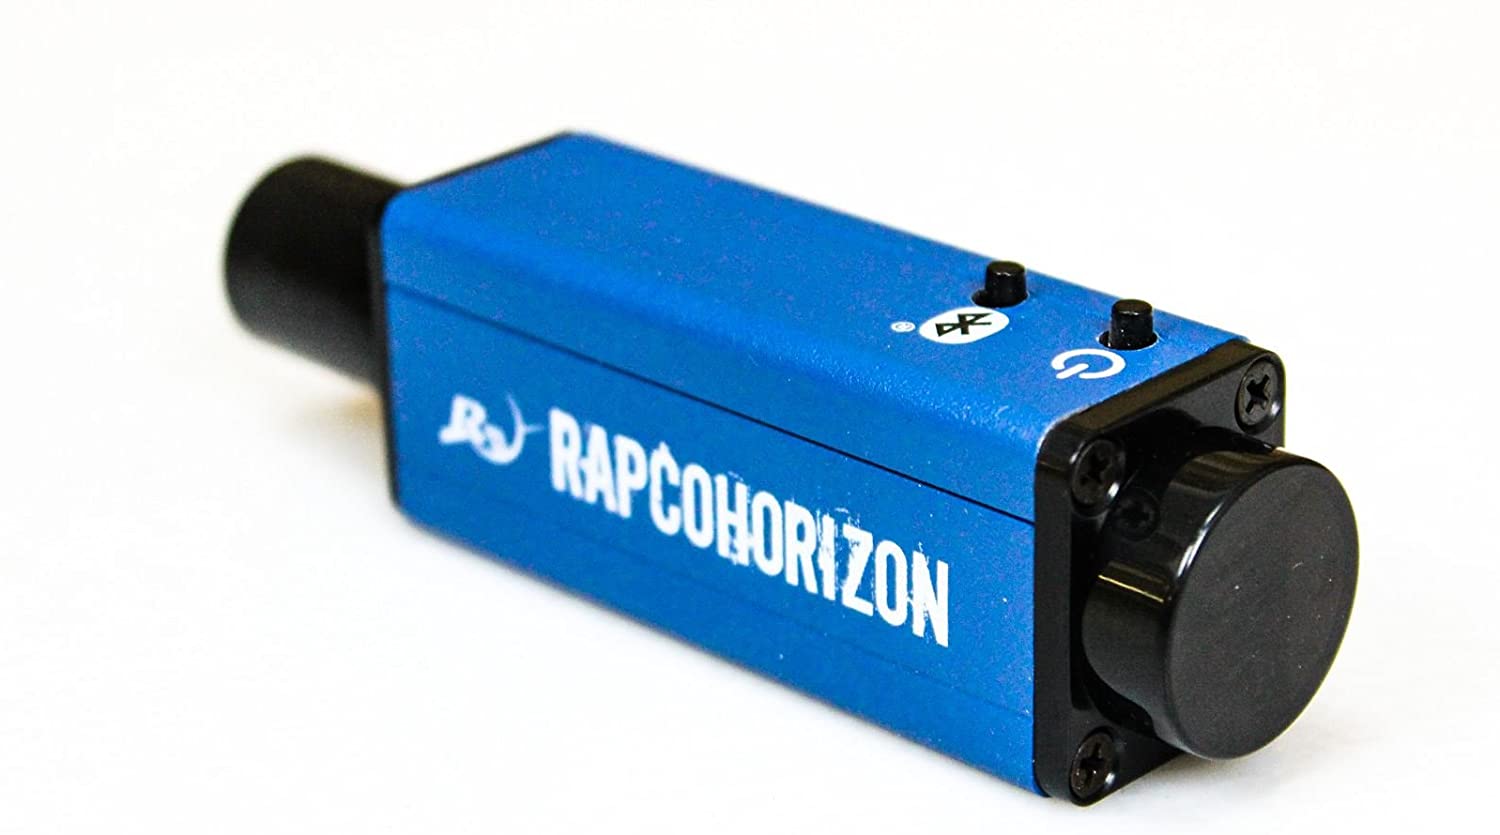 B073Y14YVZ RapcoHorizon BTIBLOX Bluetooth Receiver Interface